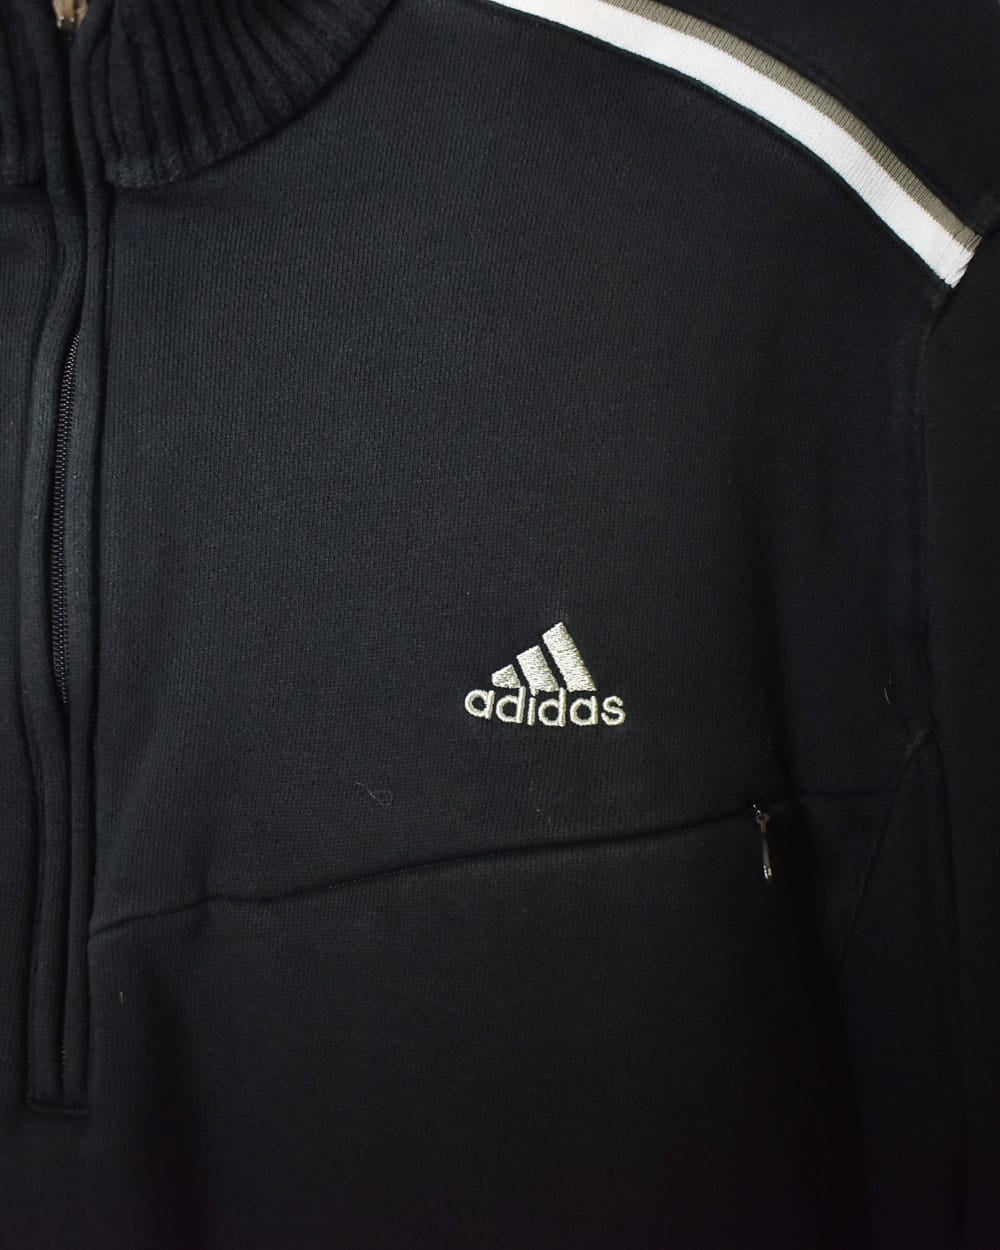 Black Adidas 1/4 Zip Sweatshirt - Large